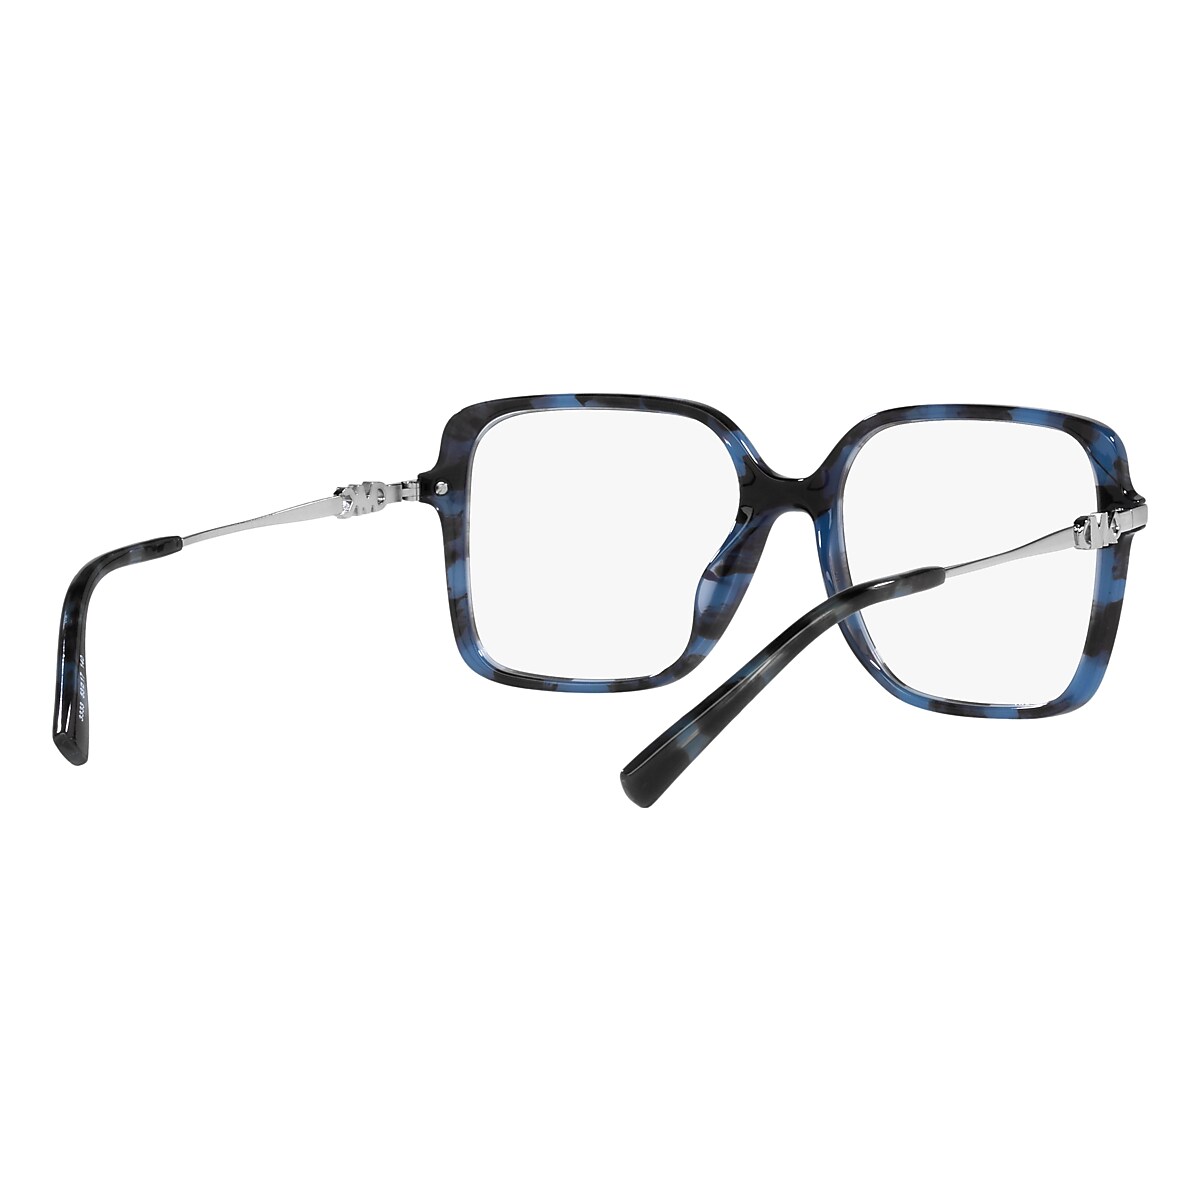 Michael Kors Blue Tortoise Eyeglasses | Glasses.com® | Free Shipping